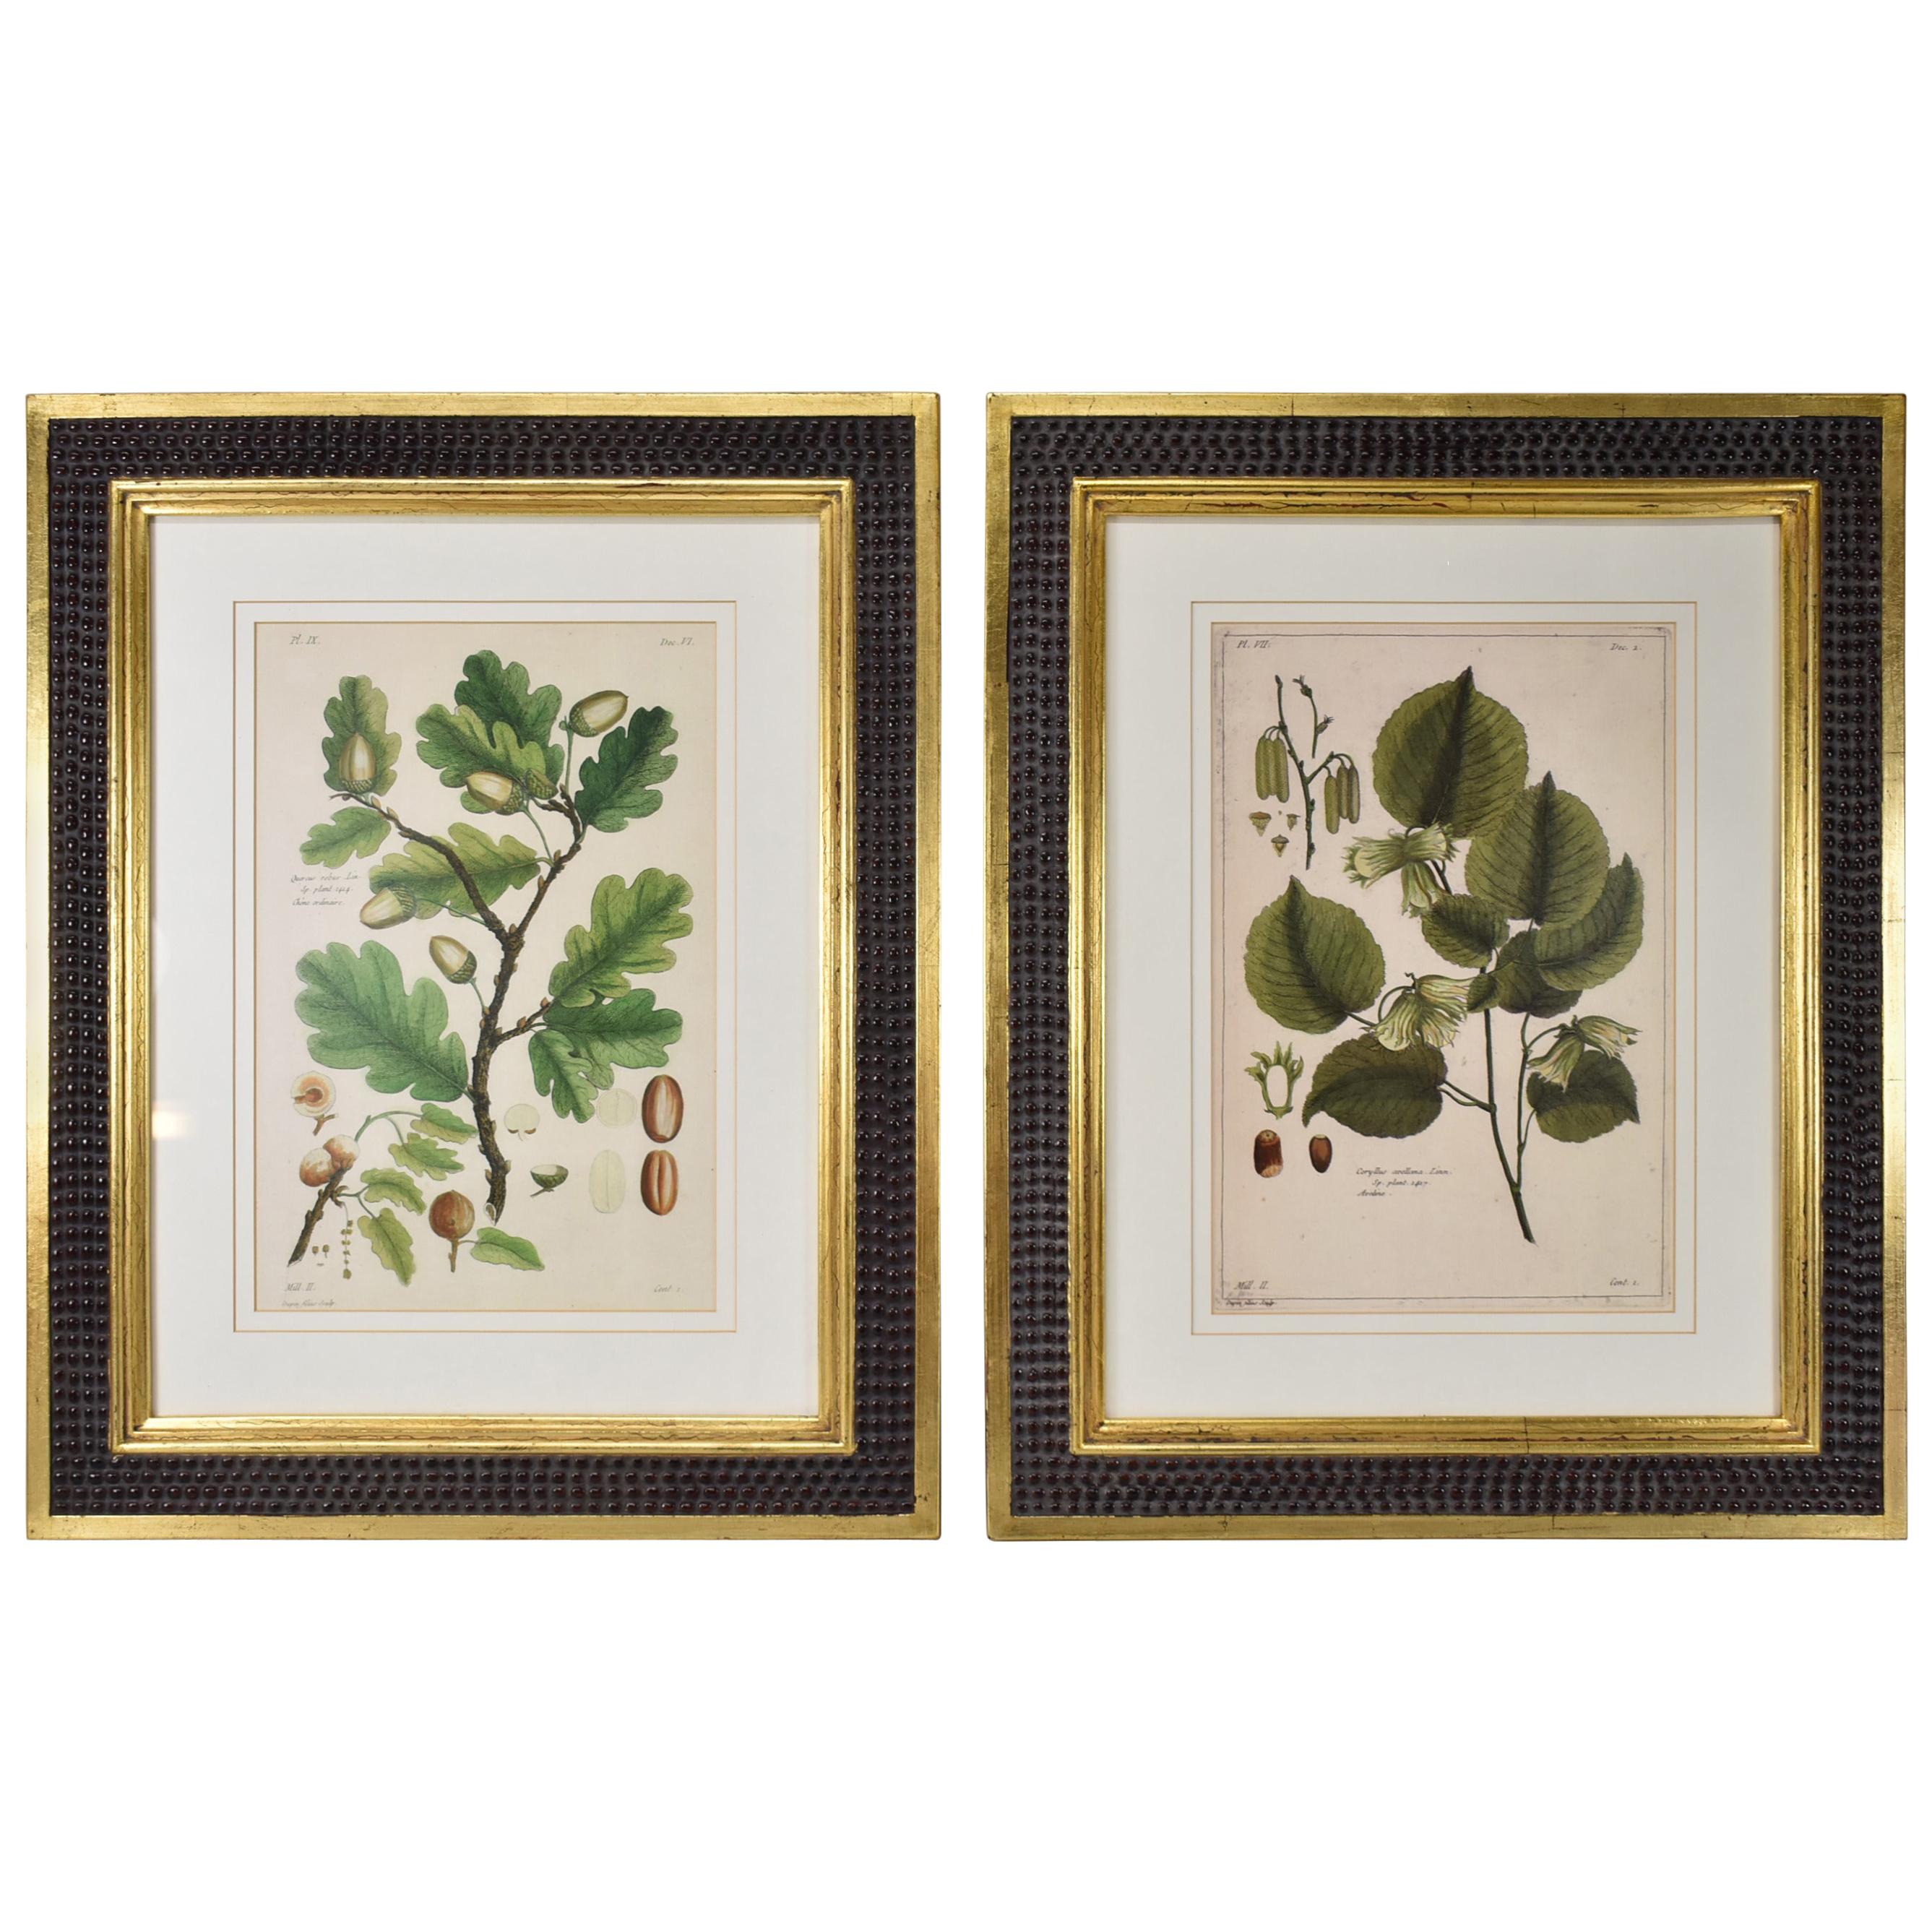 Pair of Trowbridge Classic Botanical Prints, Buchoz Leaves